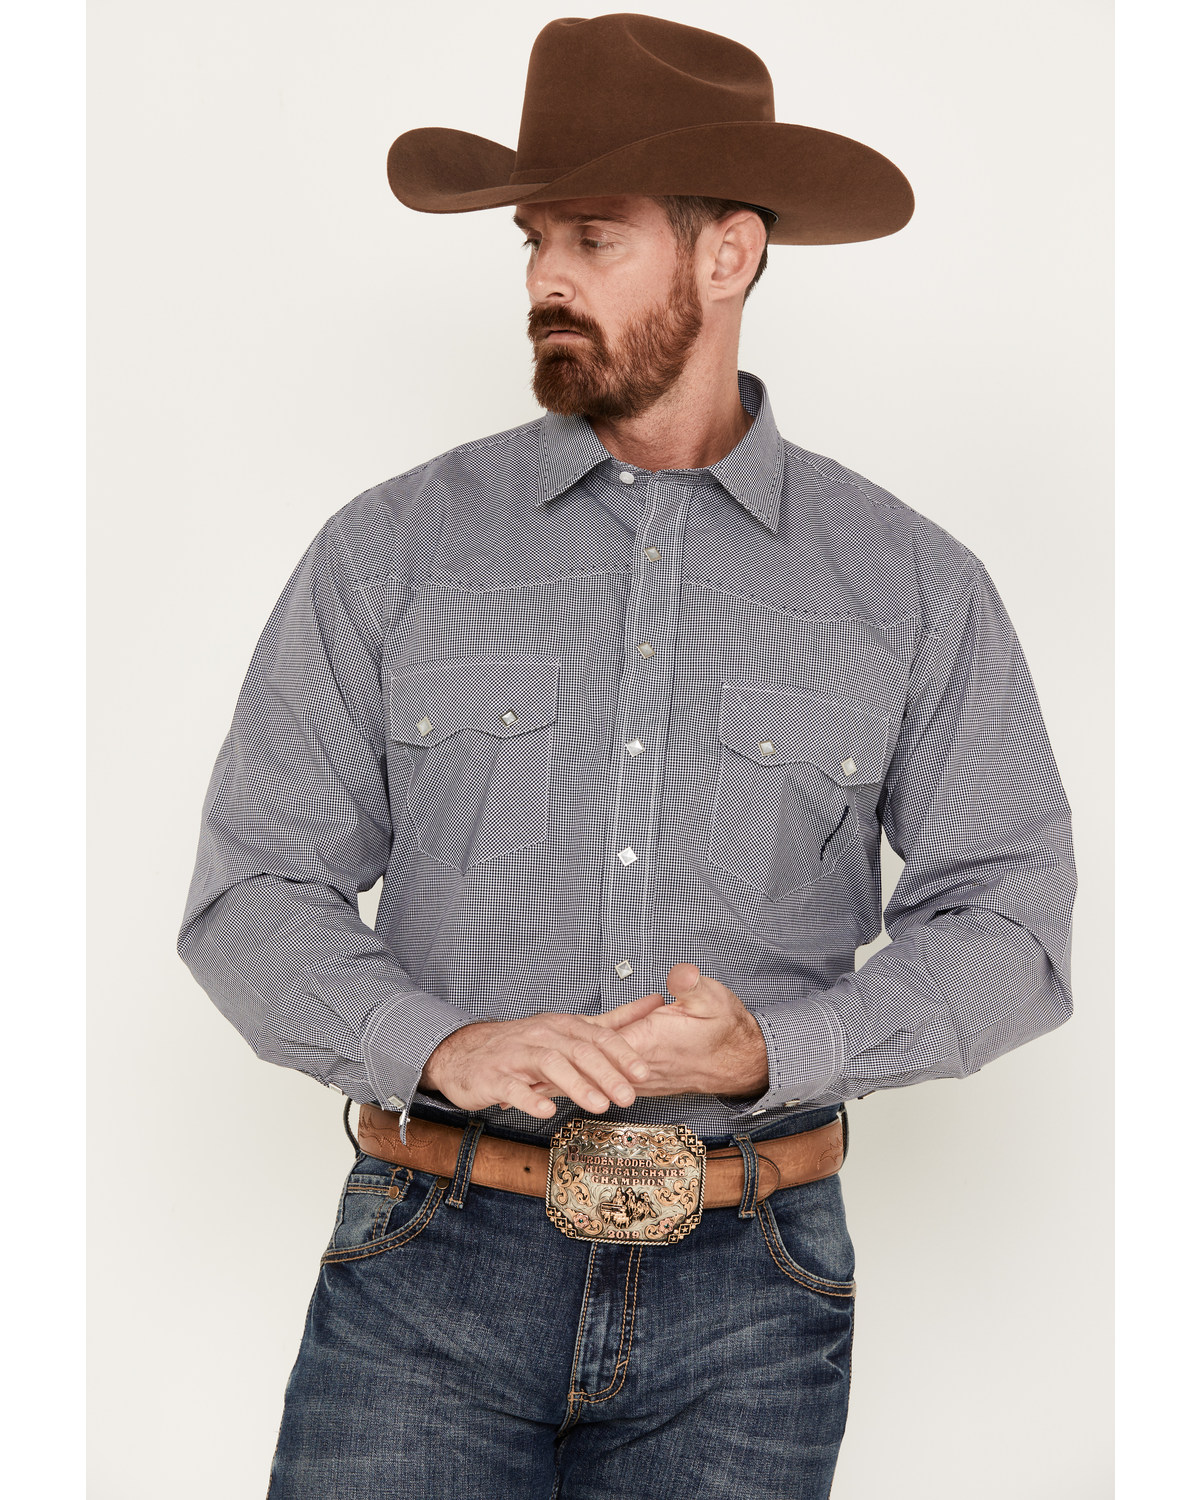 Resistol Men's Thorn Mini Checkered Print Long Sleeve Pearl Snap Western Shirt